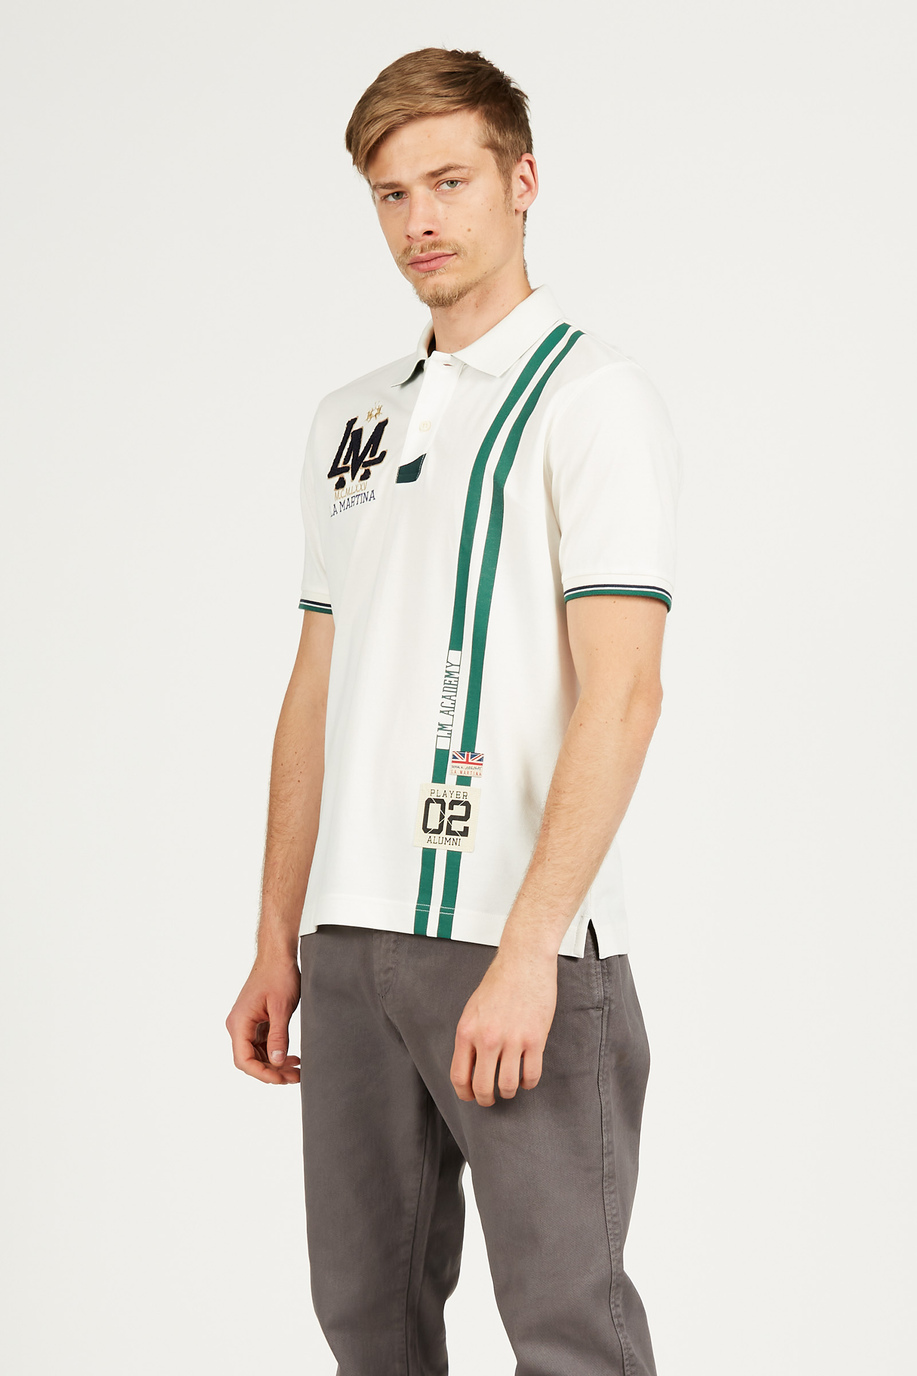 Men's long-sleeved polo shirt in 100% cotton - Polo Shirts | La Martina - Official Online Shop